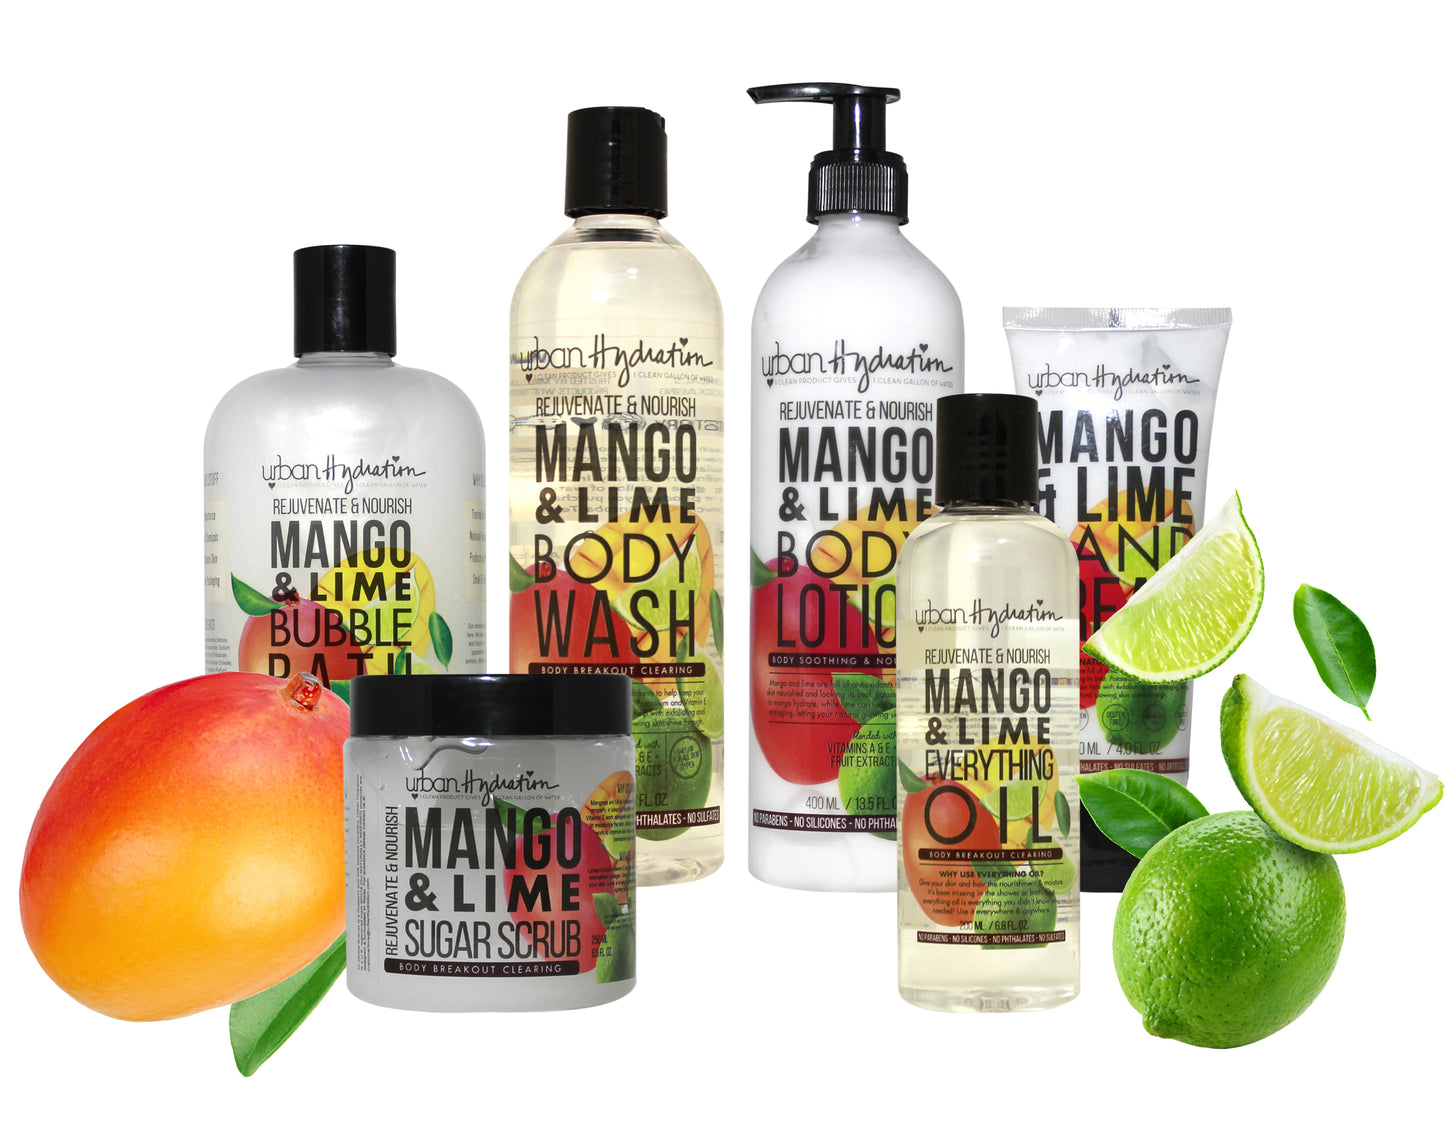 Mango Papaya Body Wash, Body Cleanser, Daily Wash